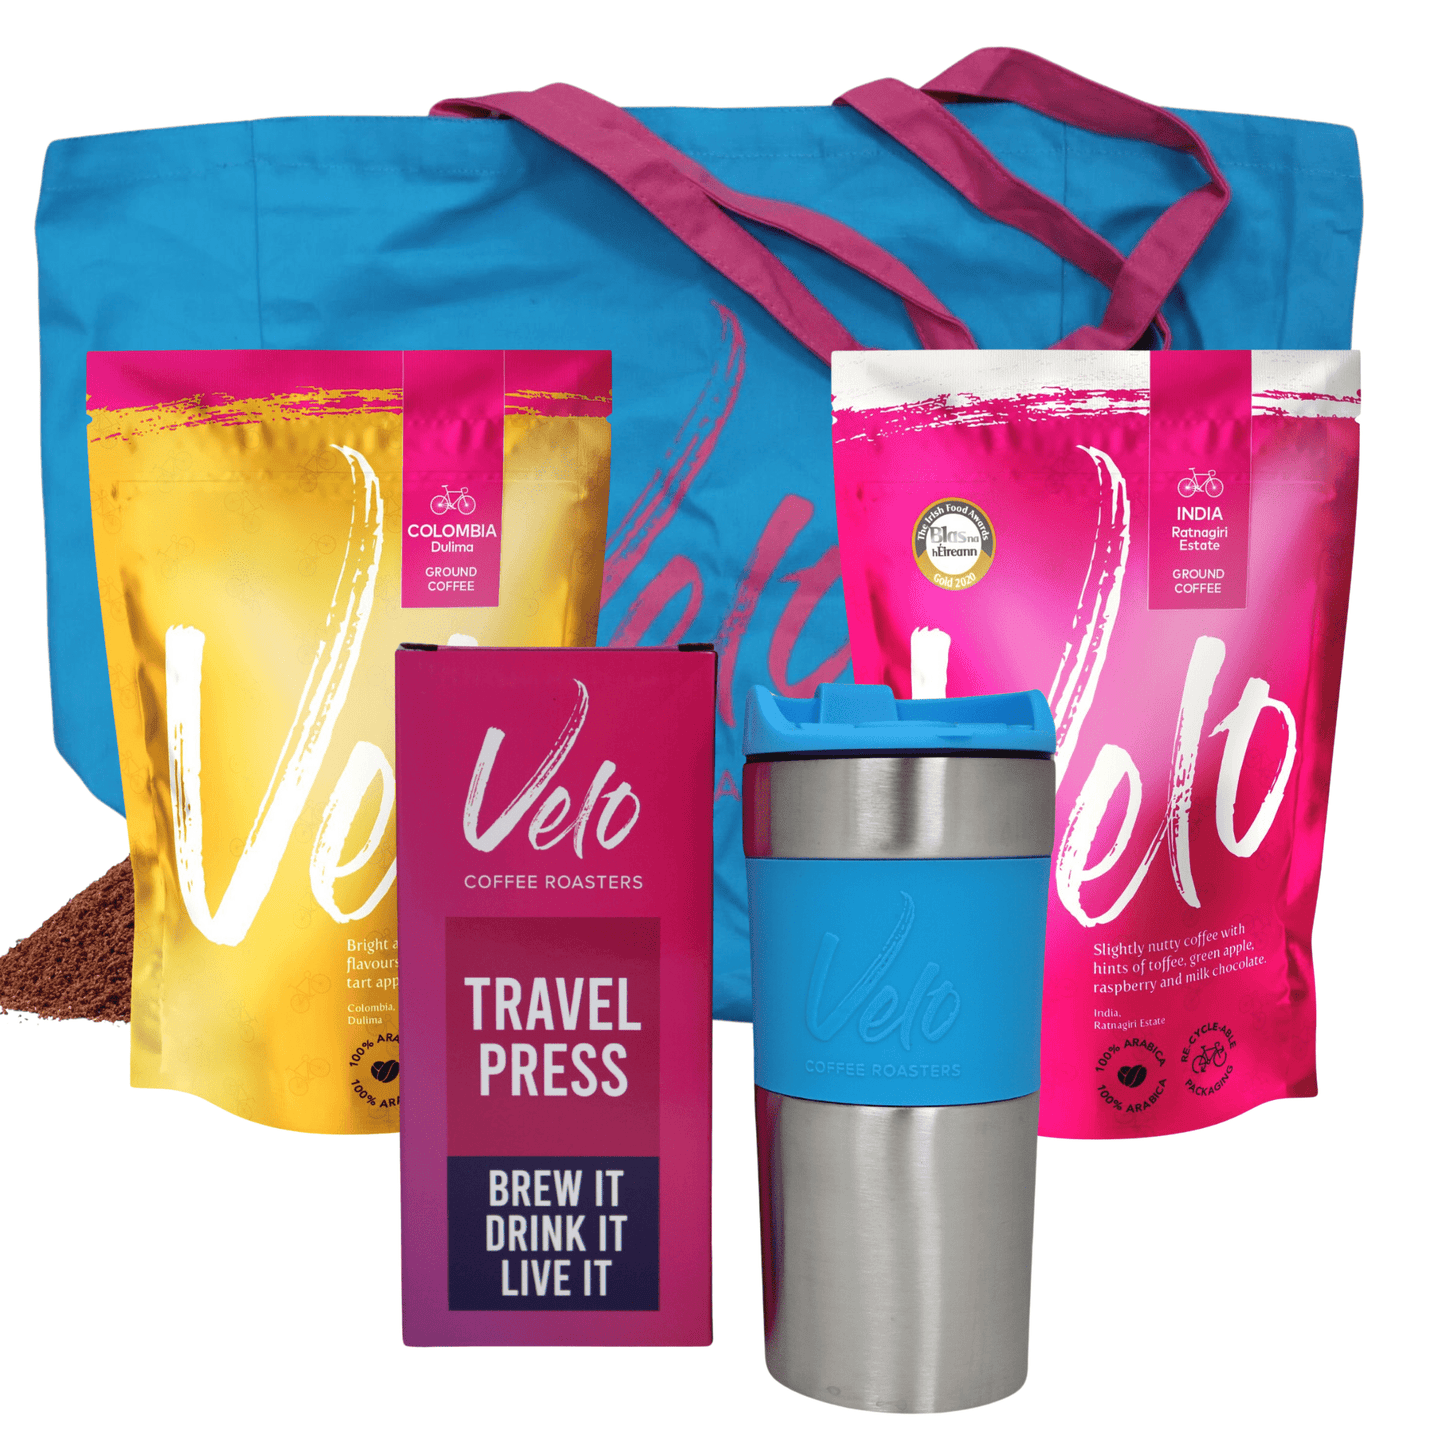 Velo Travel Perk Pack - Velo Coffee Roasters